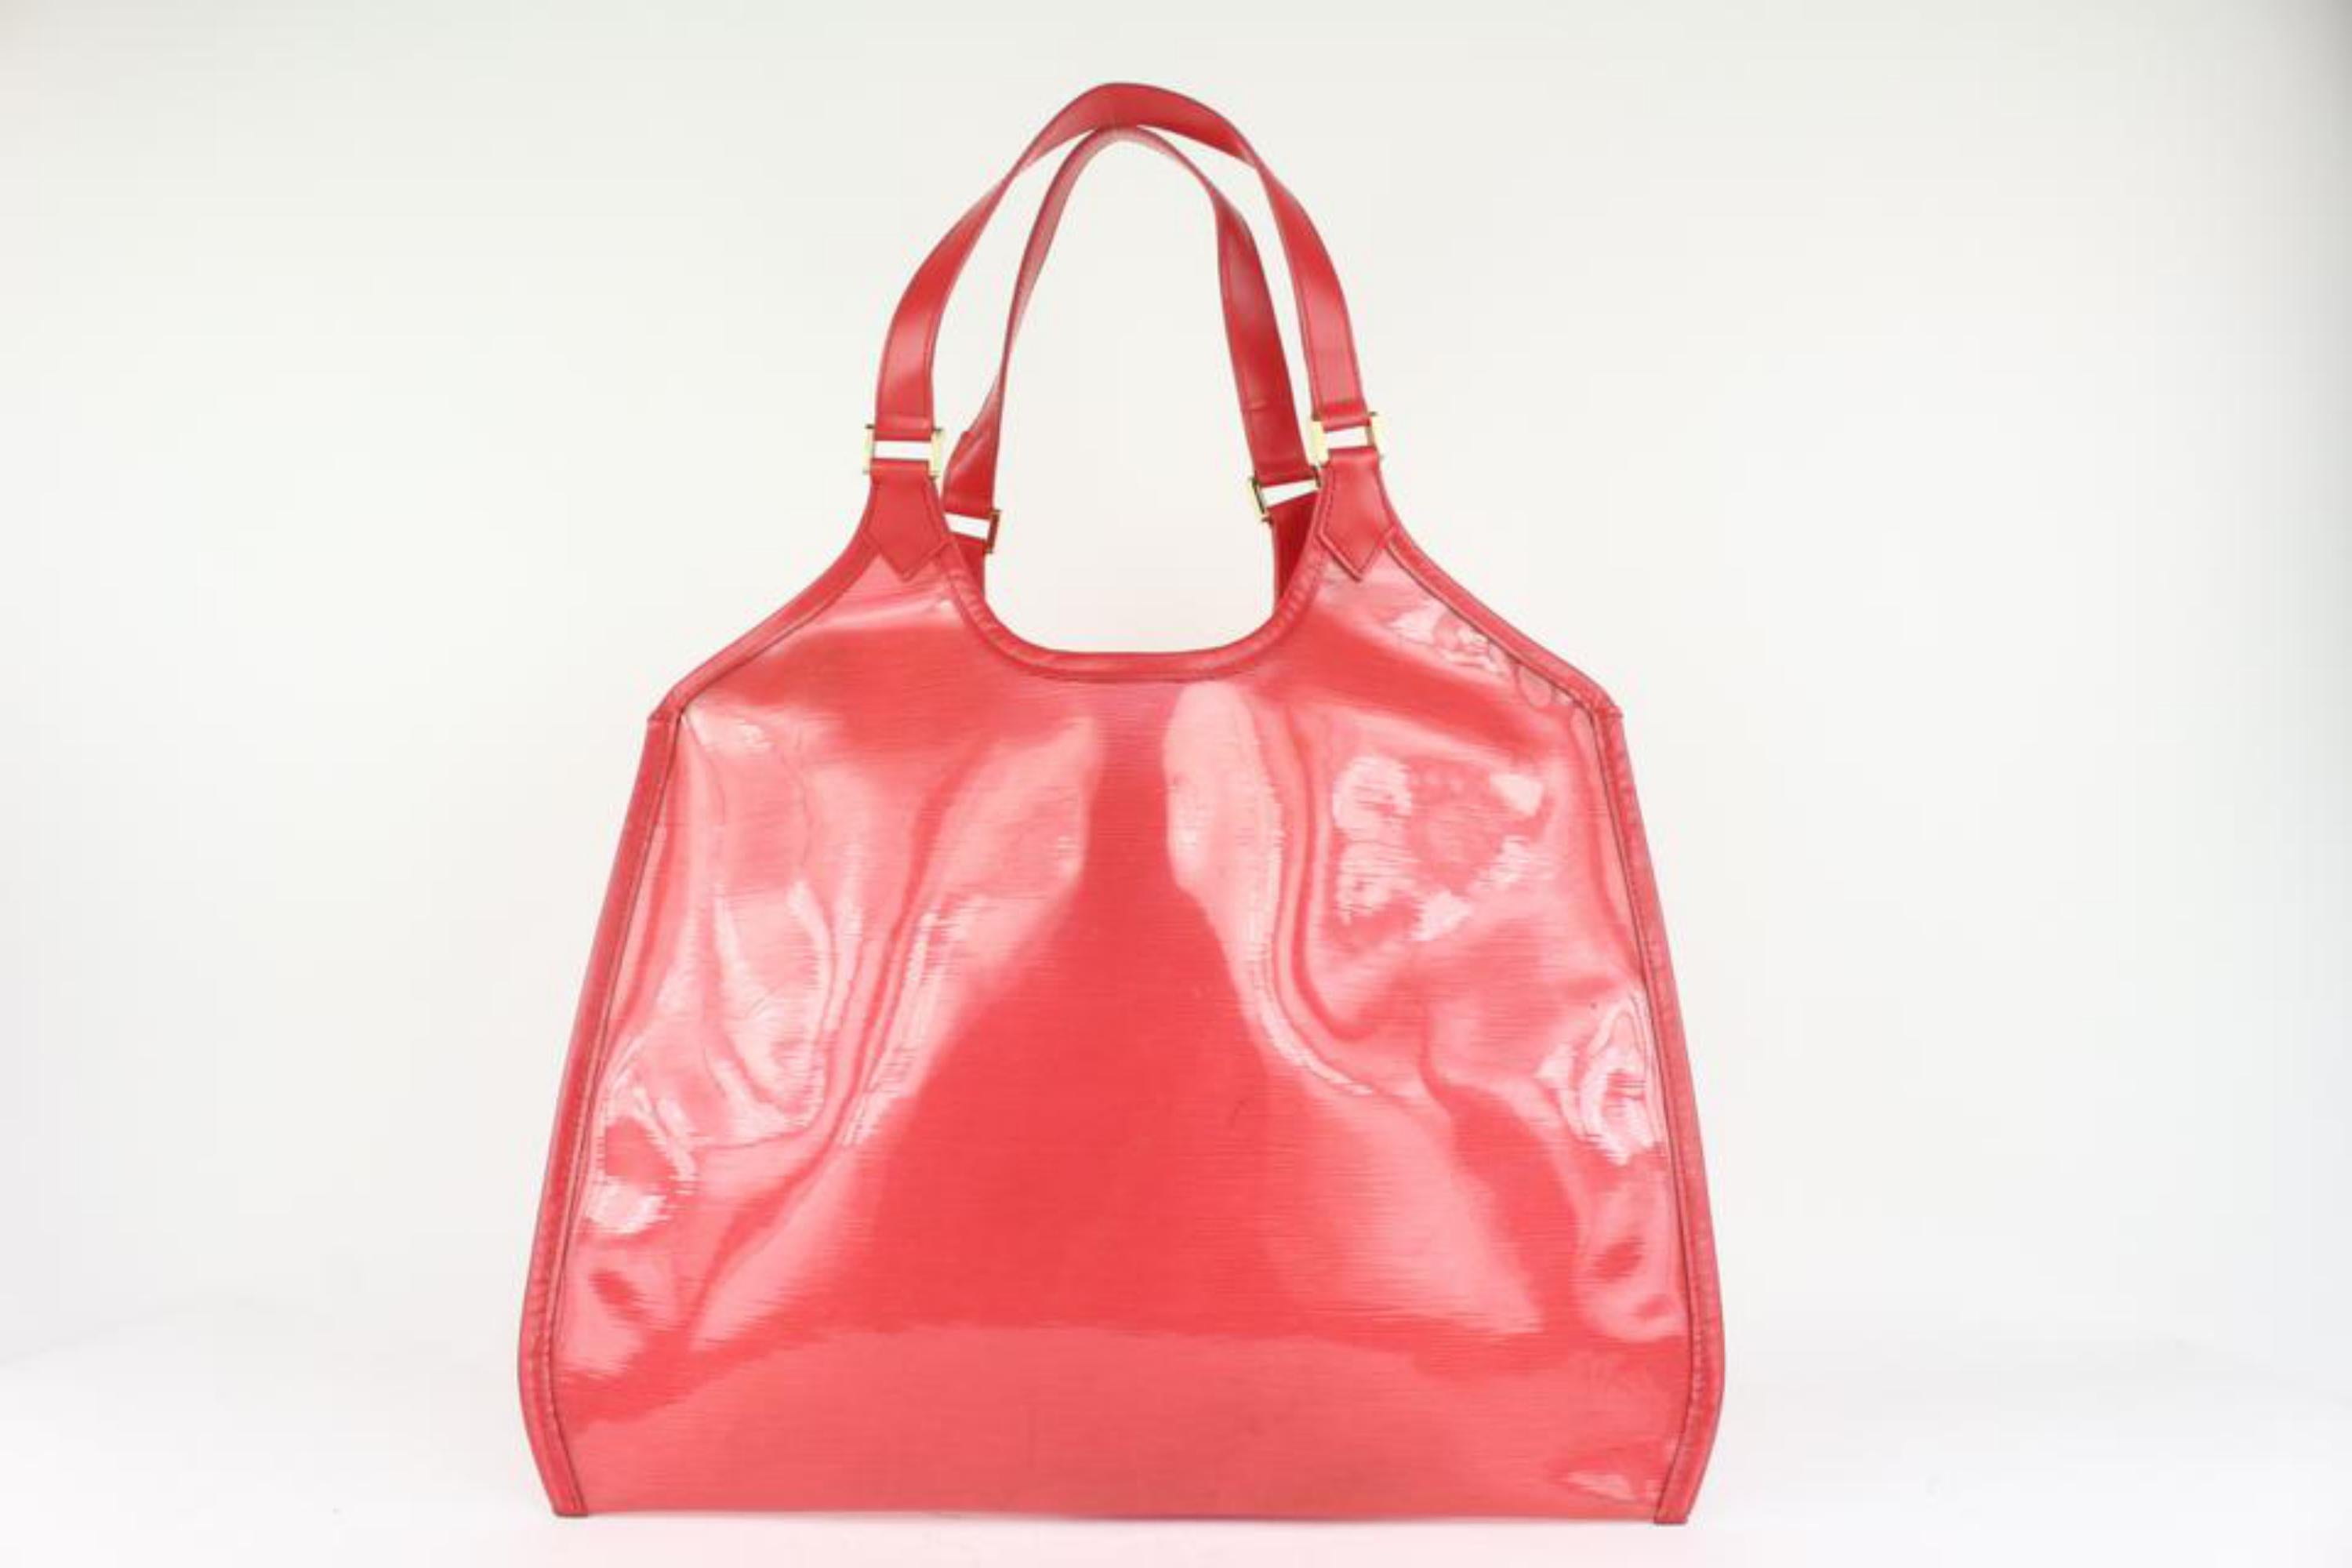 Women's Louis Vuitton Red Epi Baia Lagoon Bay Tote Bag 1015lv35